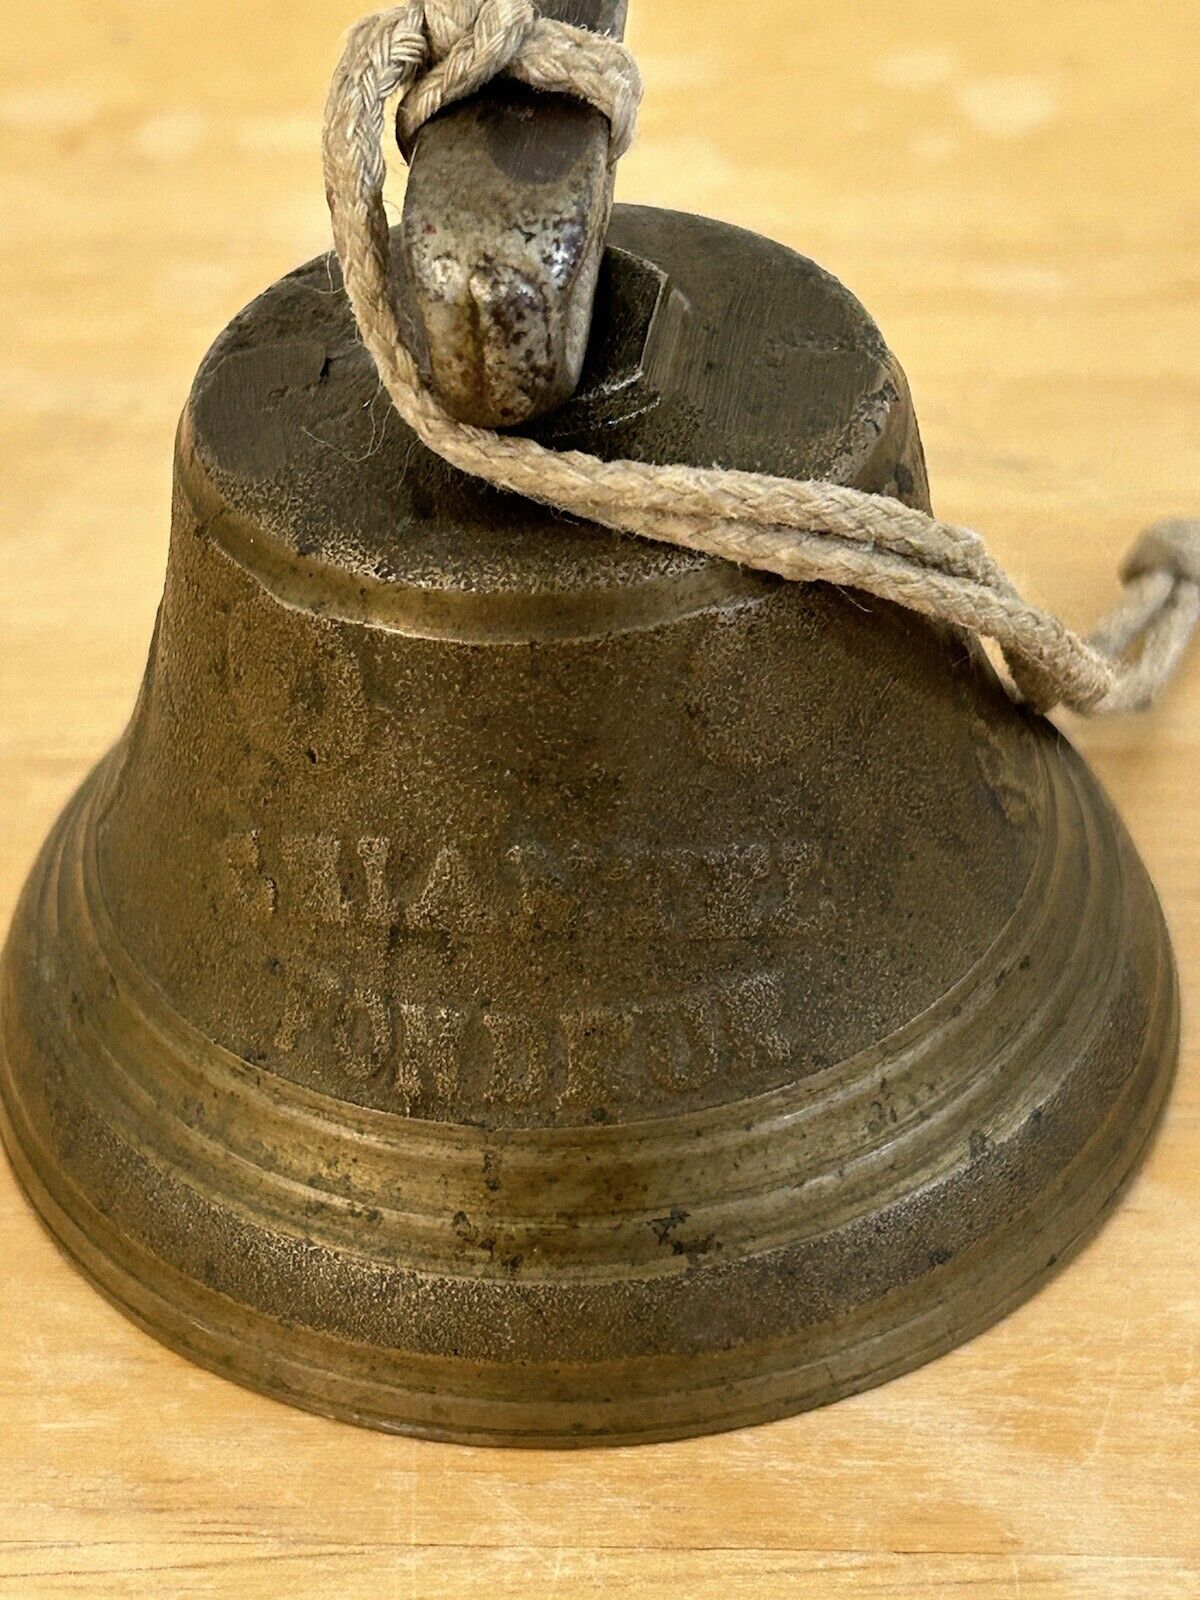 Saignelegier Chiantel Fondeur Swiss Brass Bell 1878 Metal Clapper